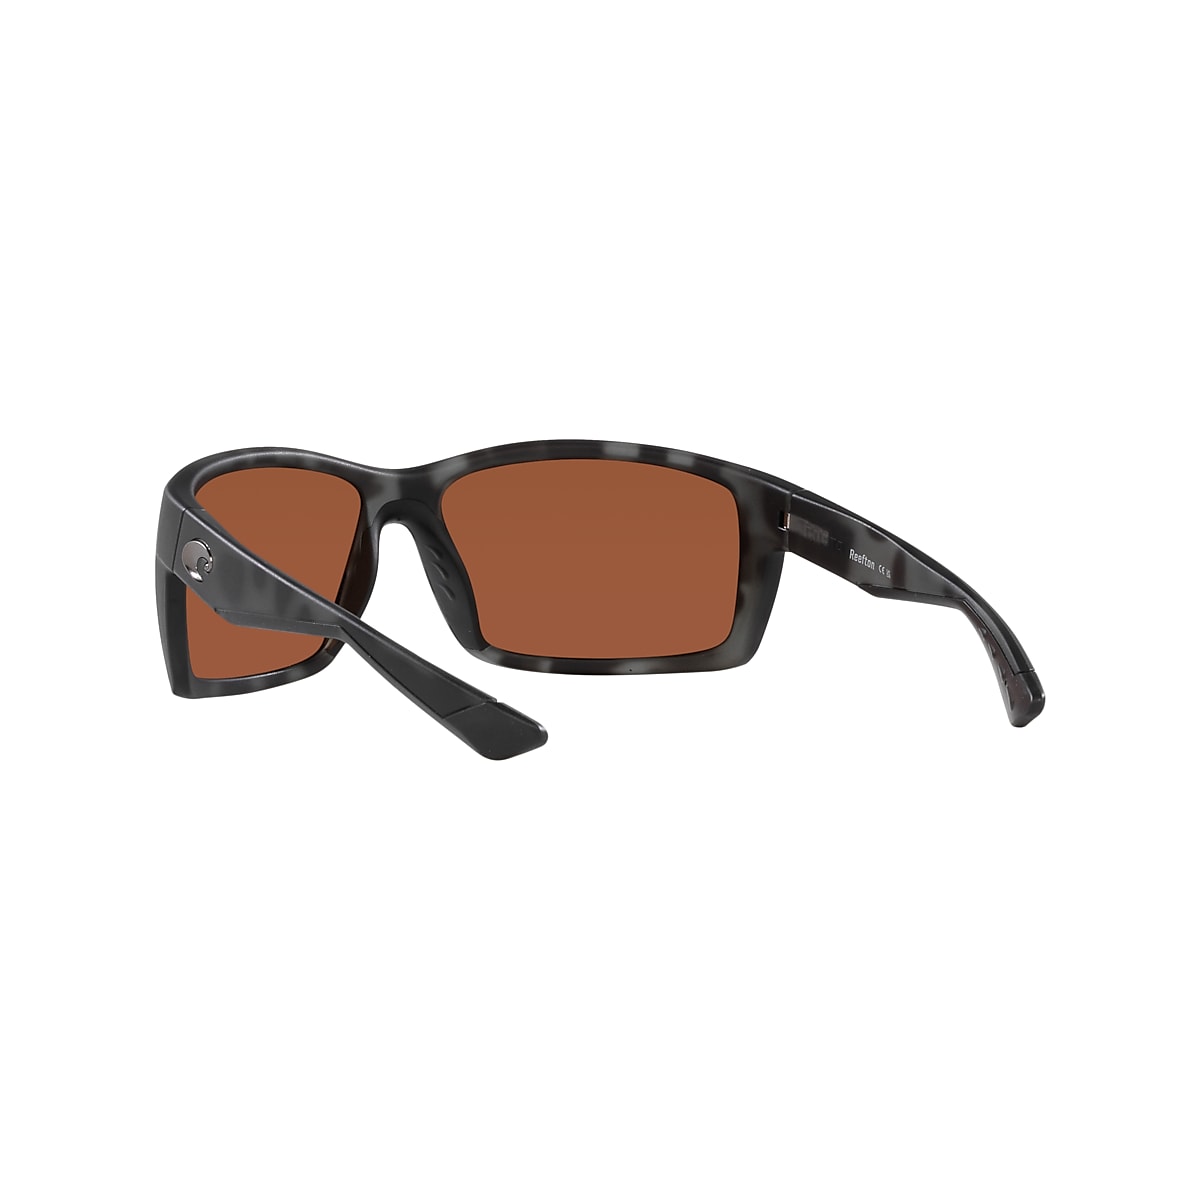 Lvvkee Top Gradient Frame Sunglasses Polarized Men Driving Sports Women 07170 C3 No Box / Multi